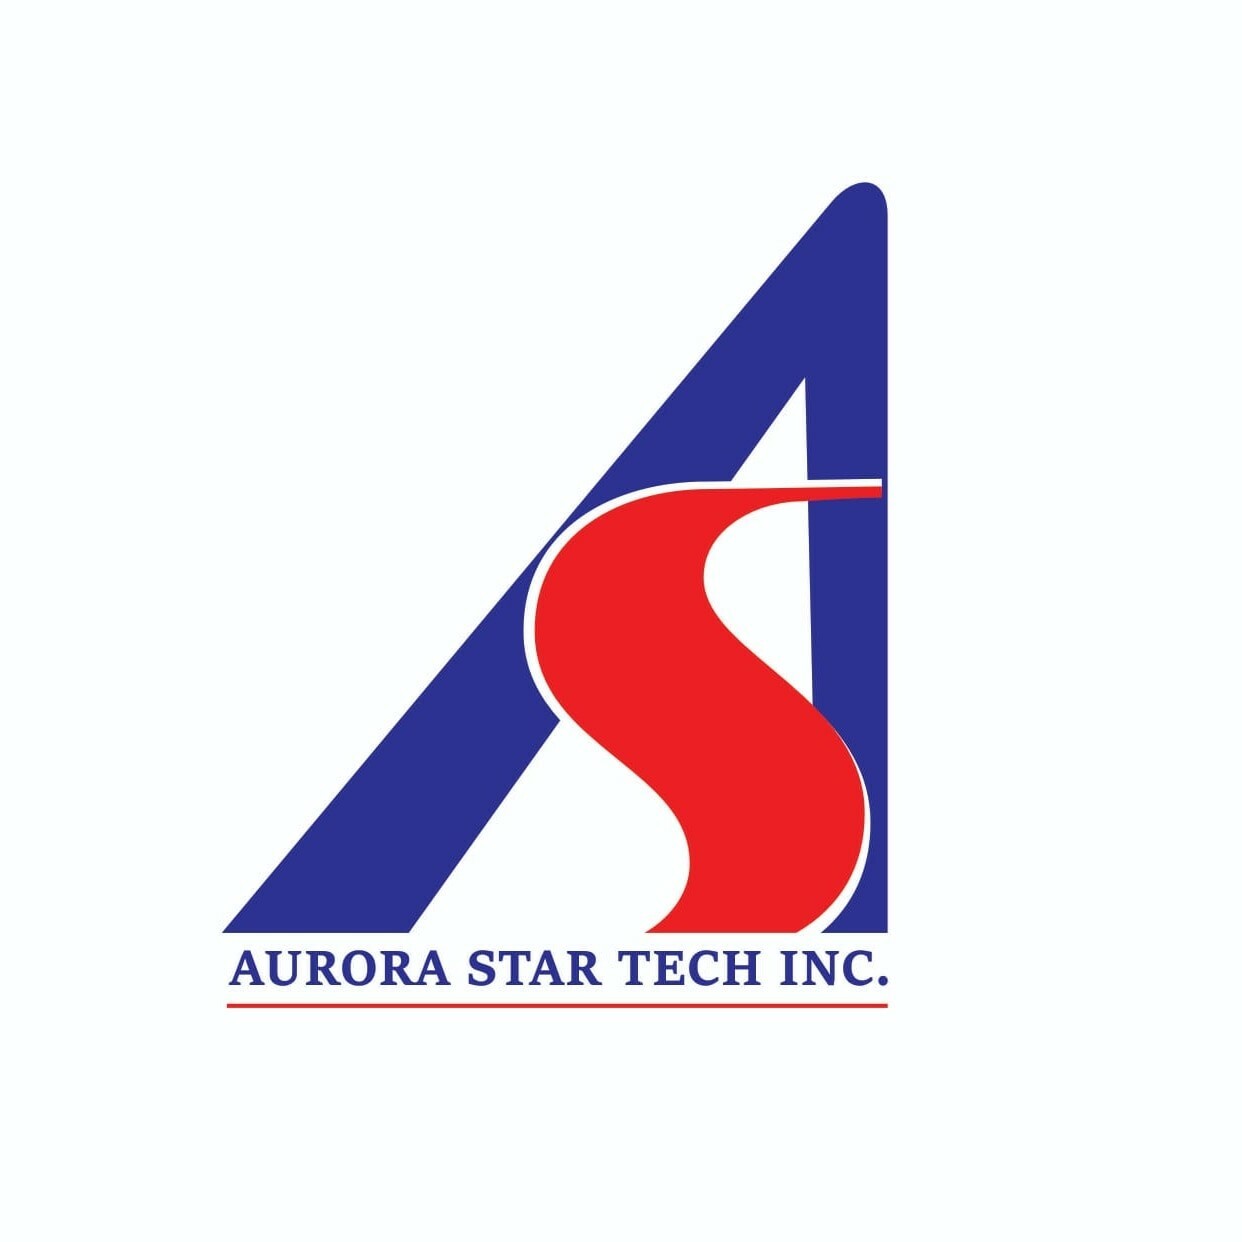 Aurora Star Tech Inc.'s logo